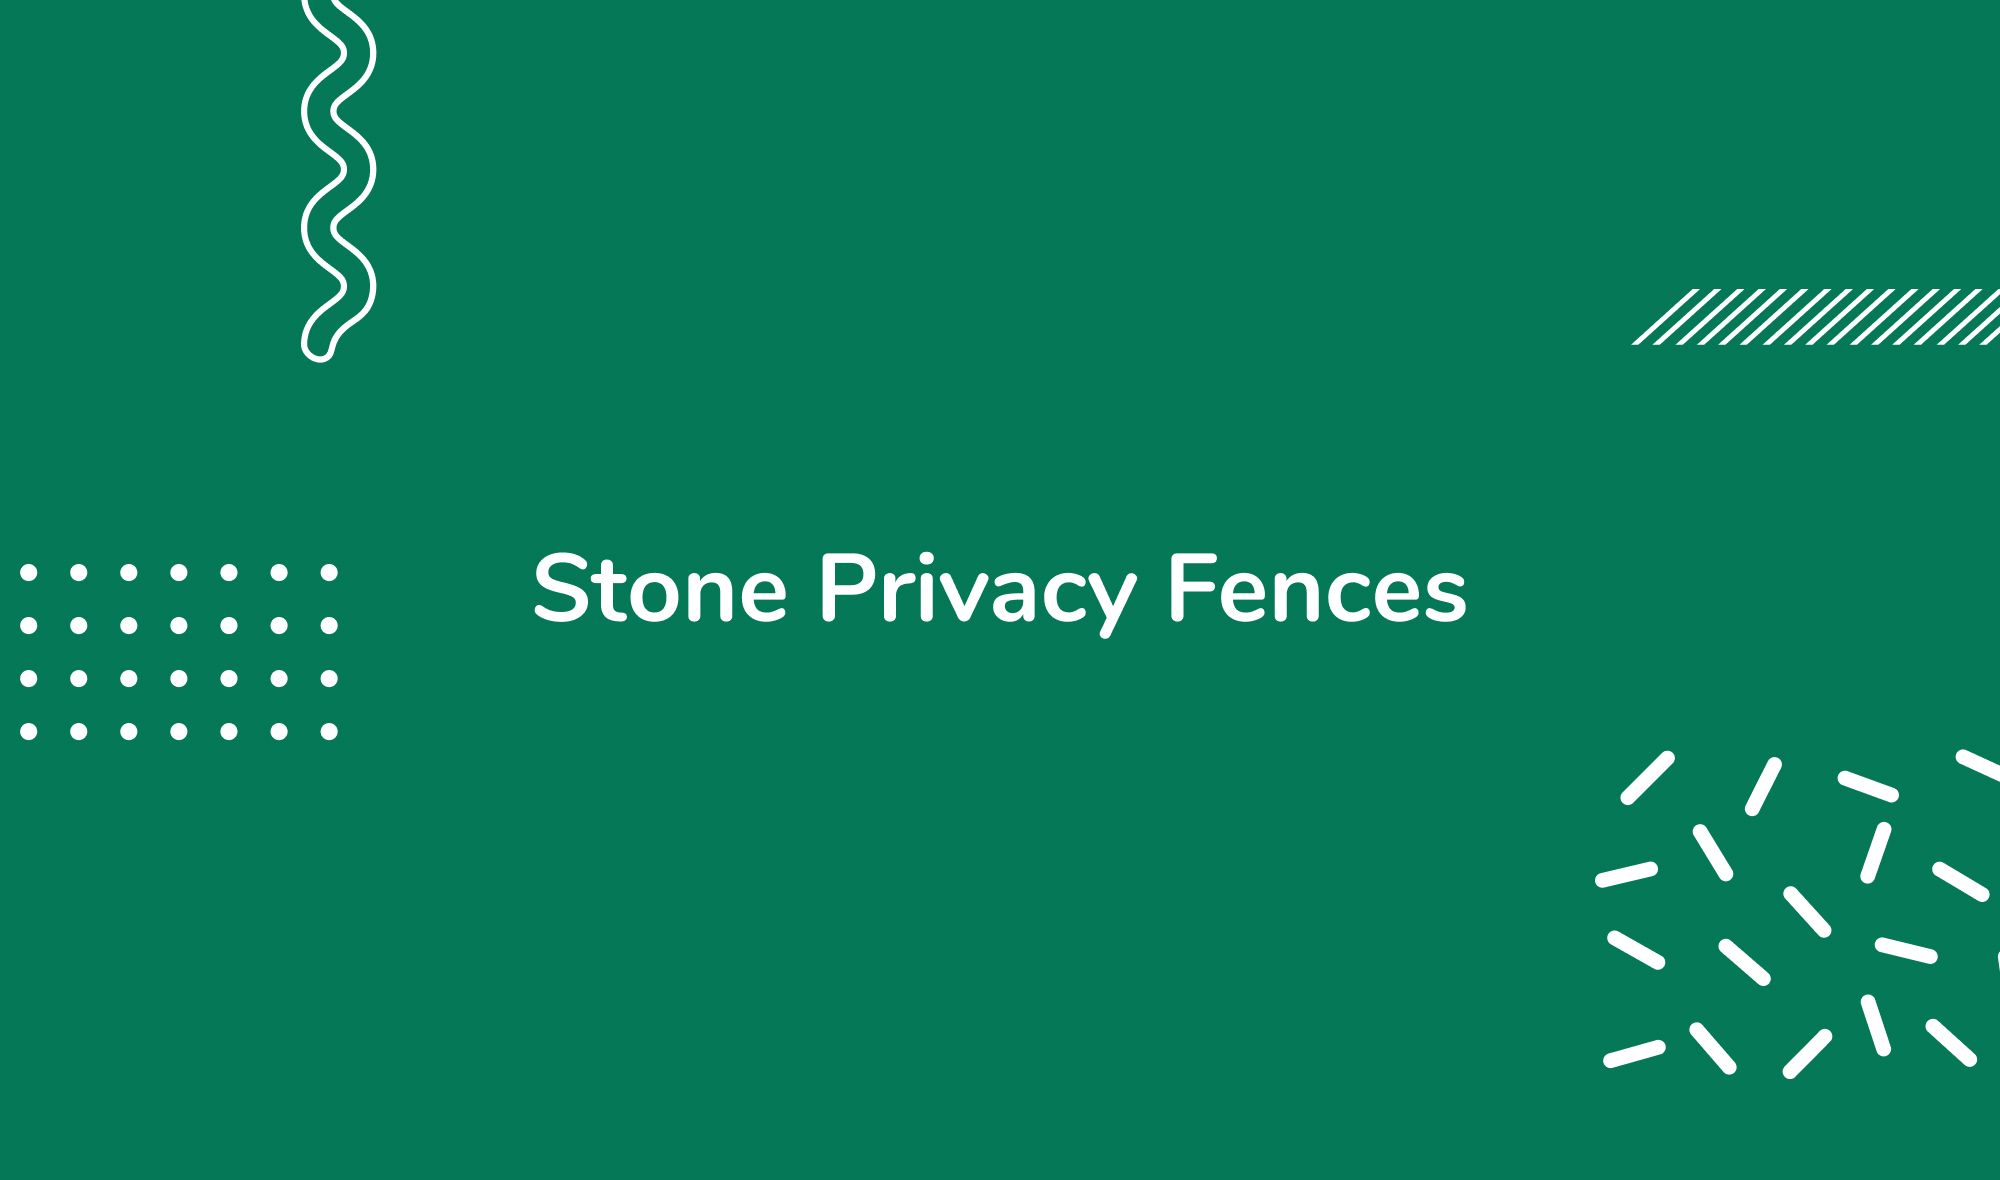 Stone Privacy Fences